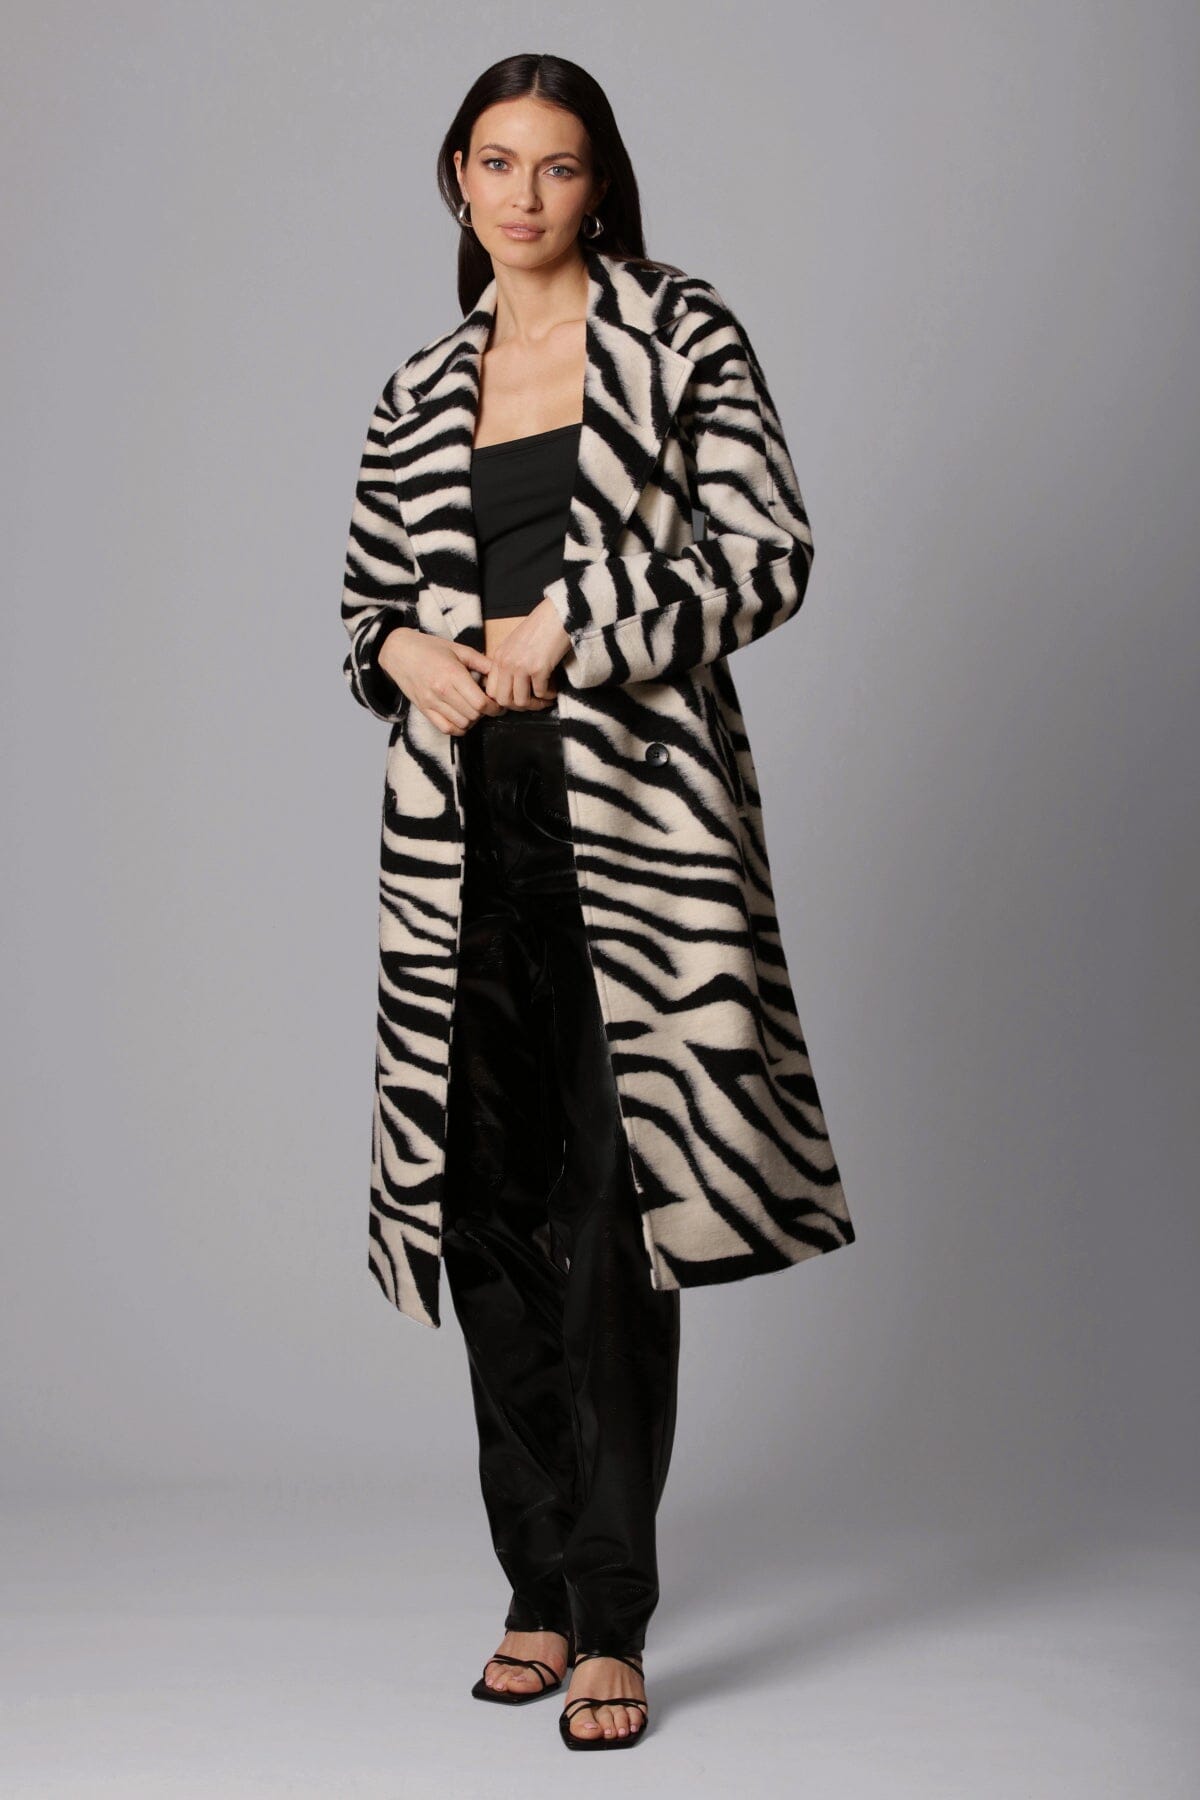 black white zebra print belted robe walker coat - women's figure flattering designer fashion date night coats outerwear